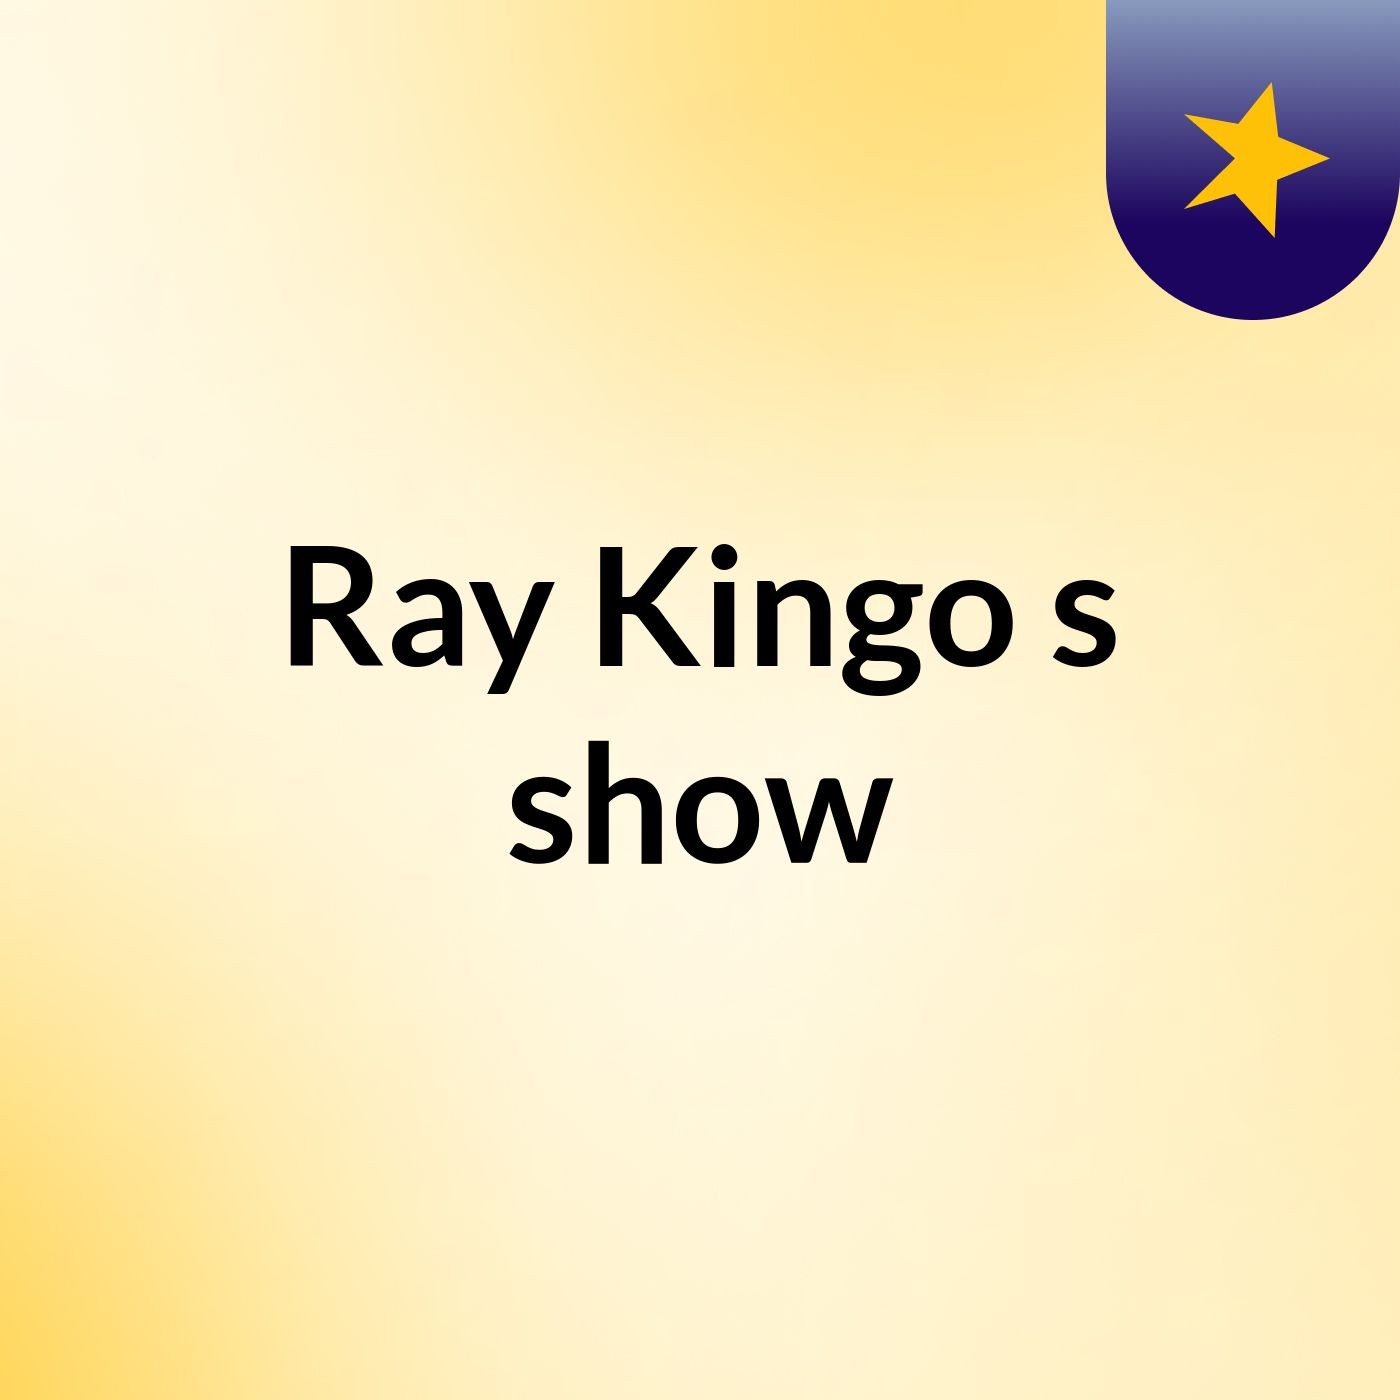 Ray Kingo's show